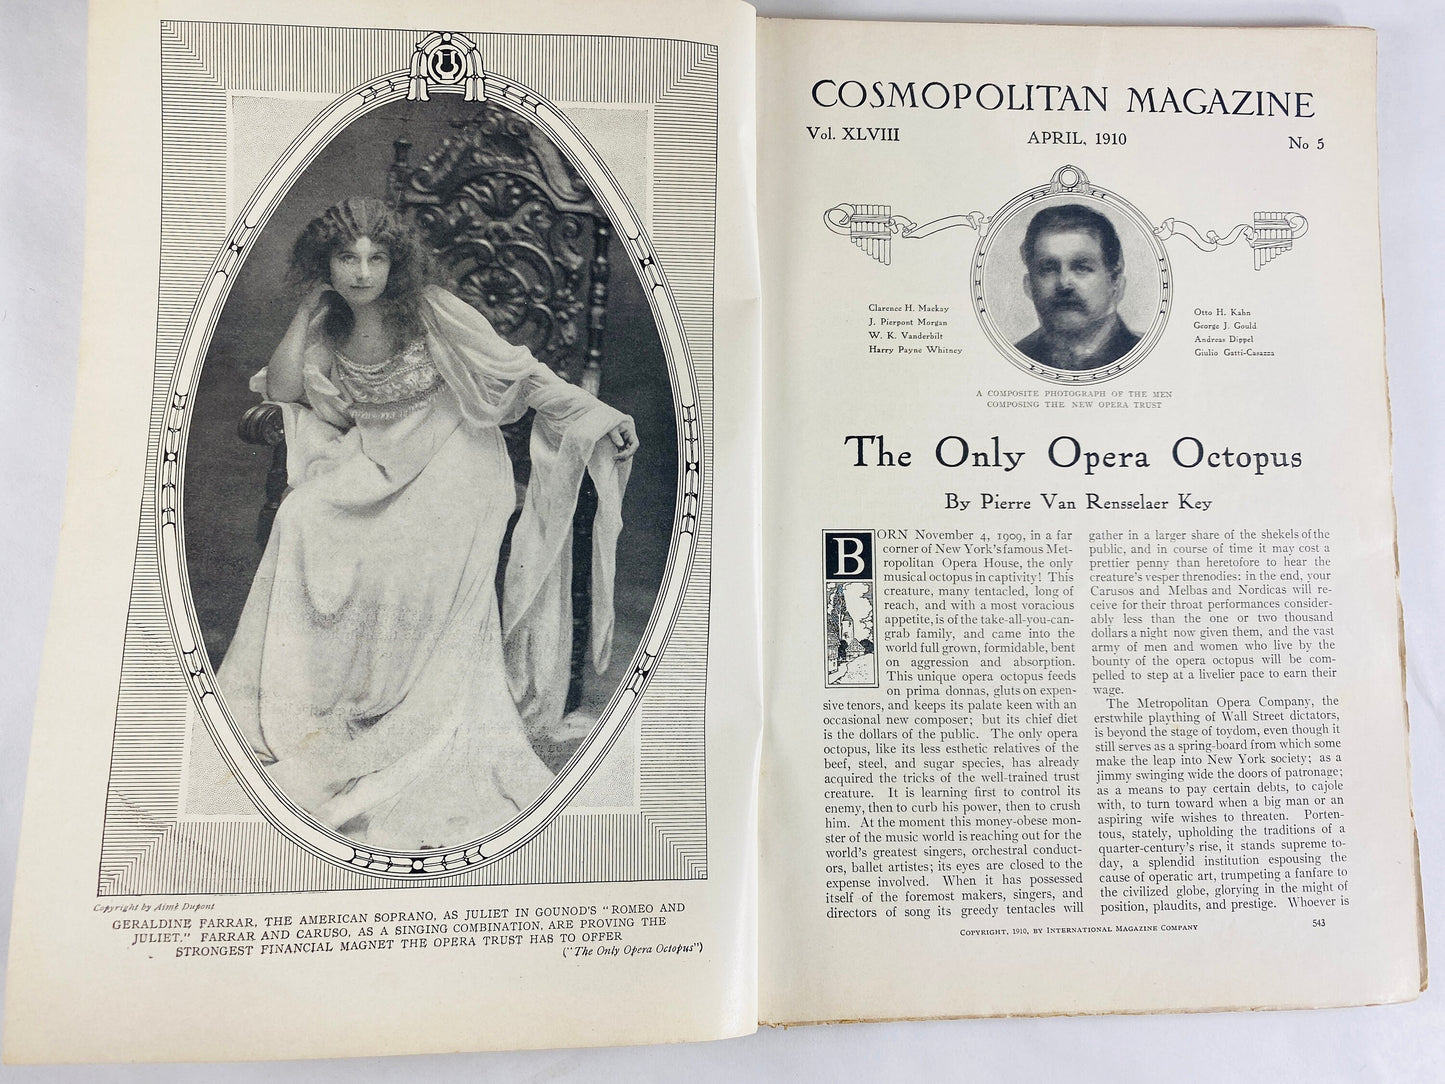 1910 vintage Cosmopolitan Magazine Vol 48 No 5 featuring Only Opera Octopus by Pierre Van Rensselaer Key, Imagination by Charles Ferguson